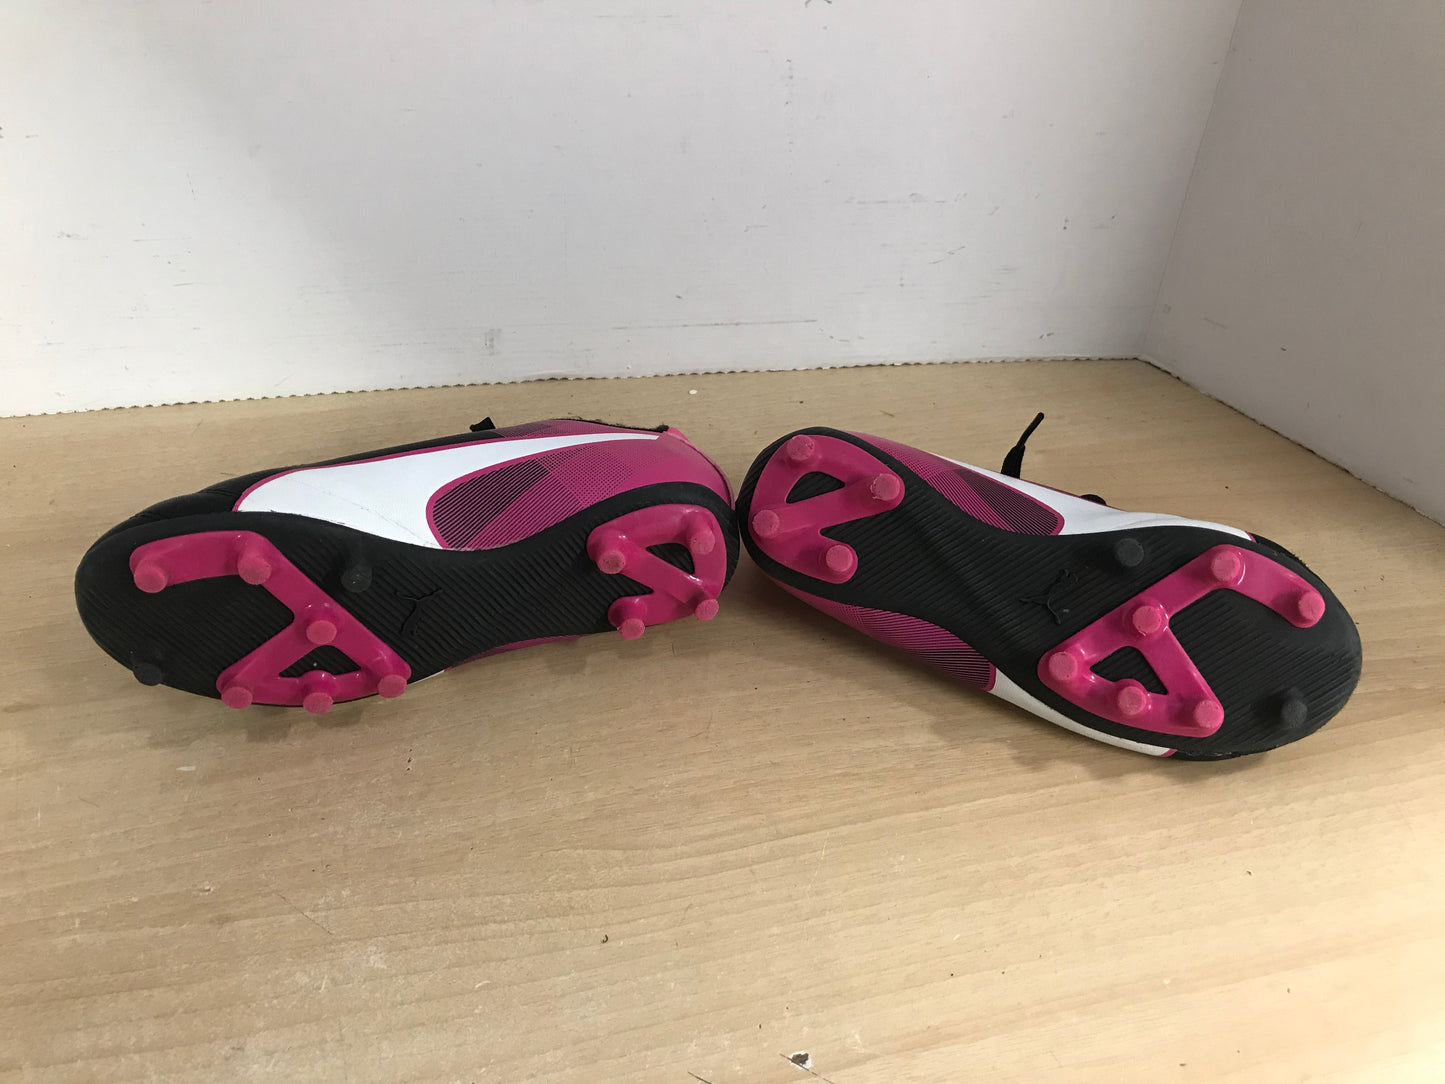 Soccer Shoes Cleats Child Size 1.5 Puma Pink White Black Excellent